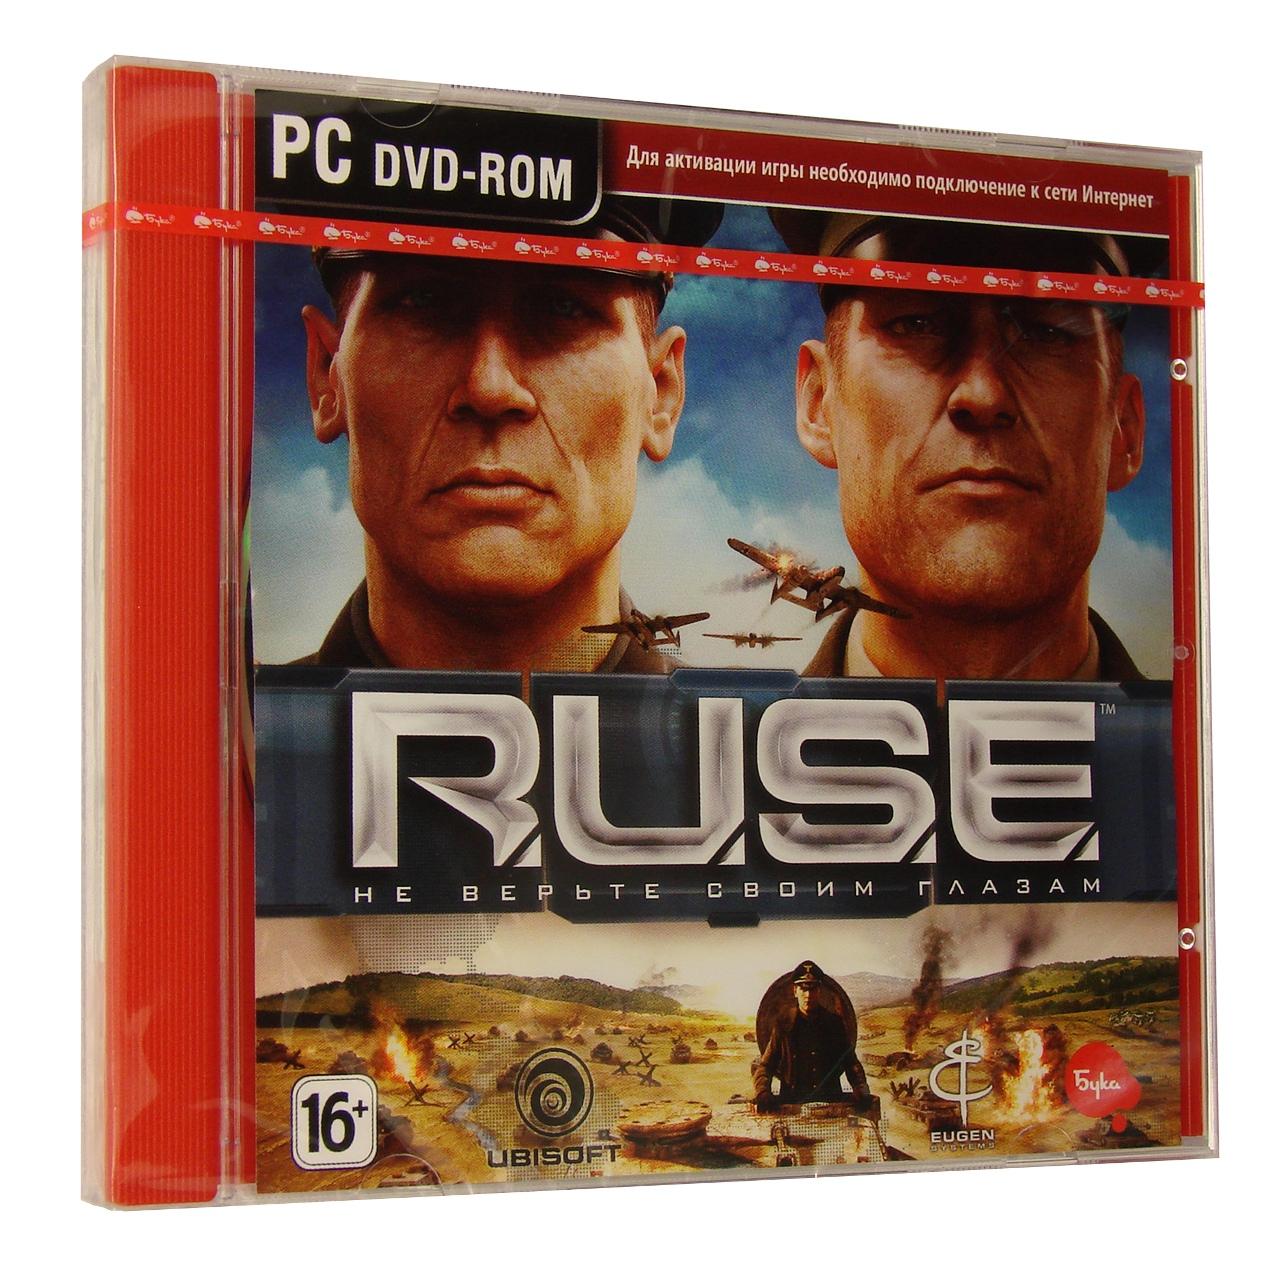 Компьютерный компакт-диск R.U.S.E (PC), фирма "Бука", 1DVD